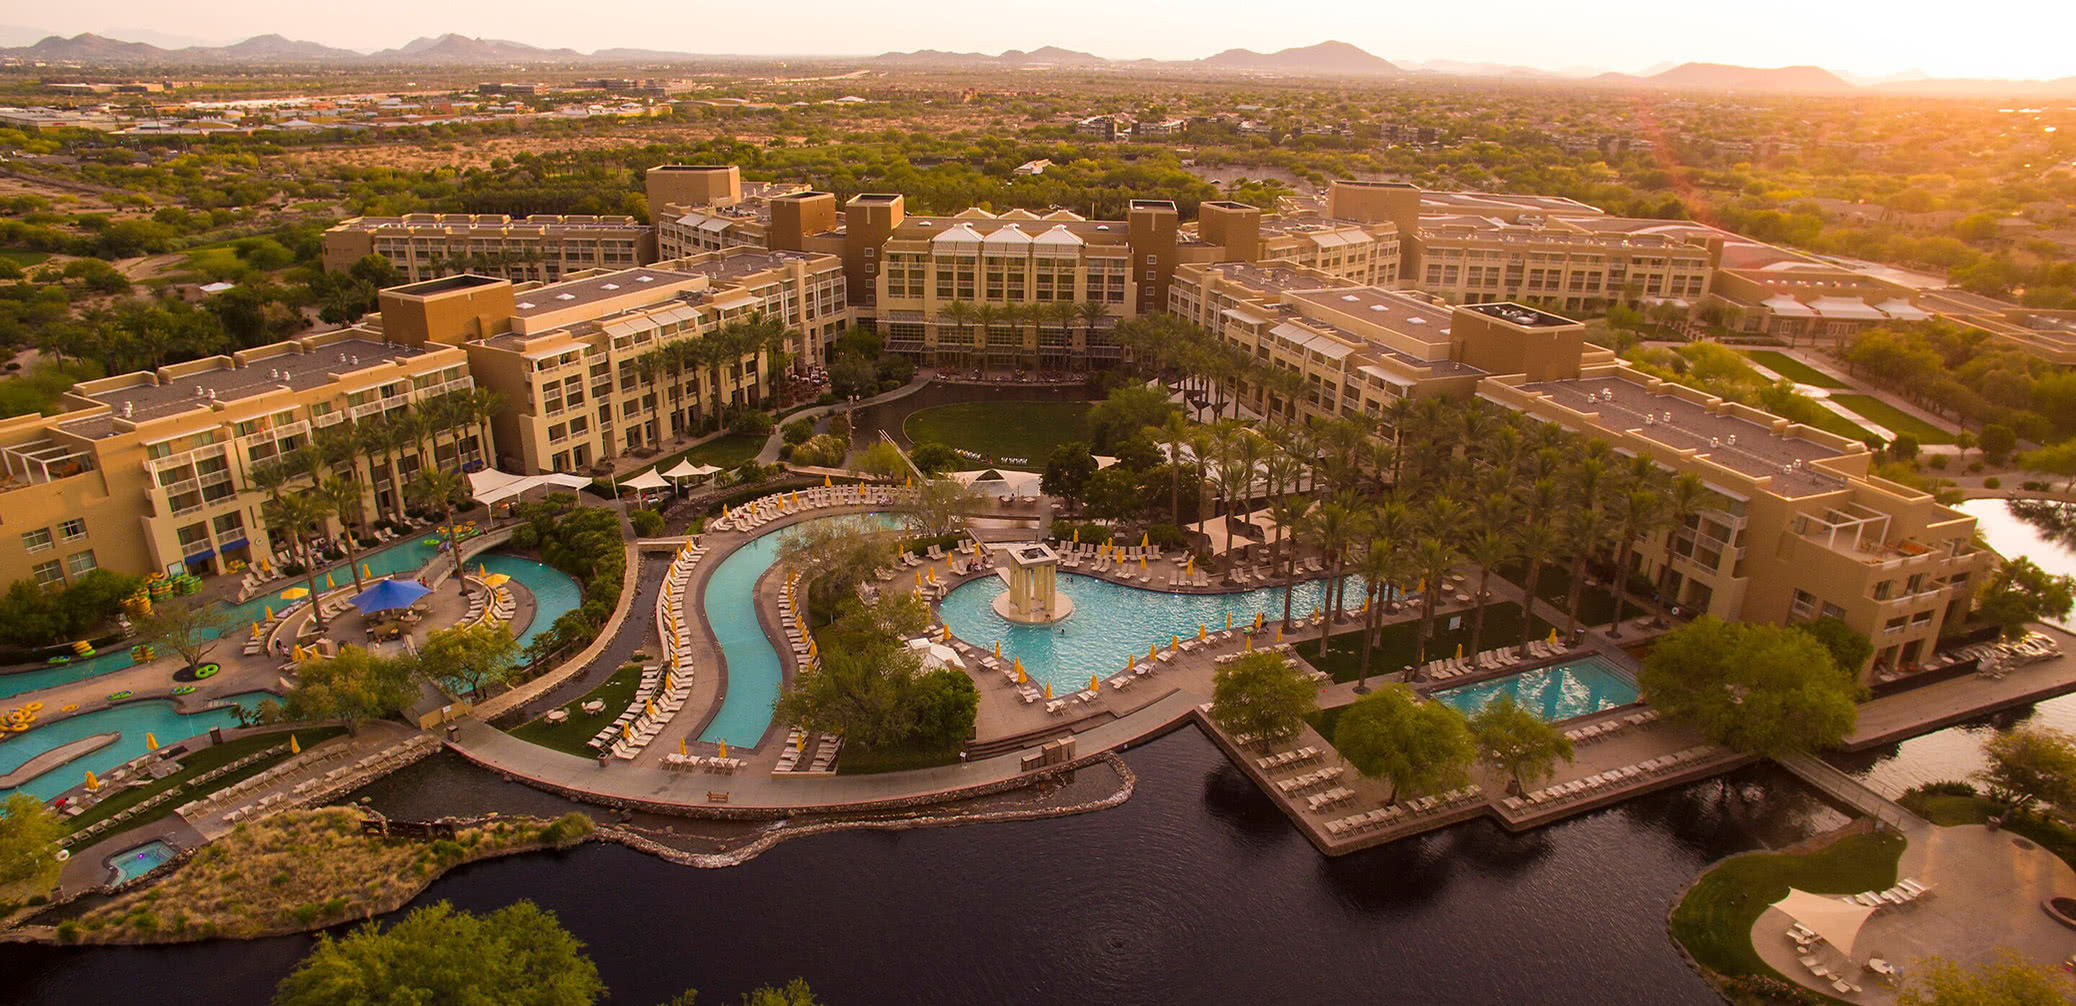 Best Hotel Executive Club Lounges In Phoenix, Scottsdale, Arizona